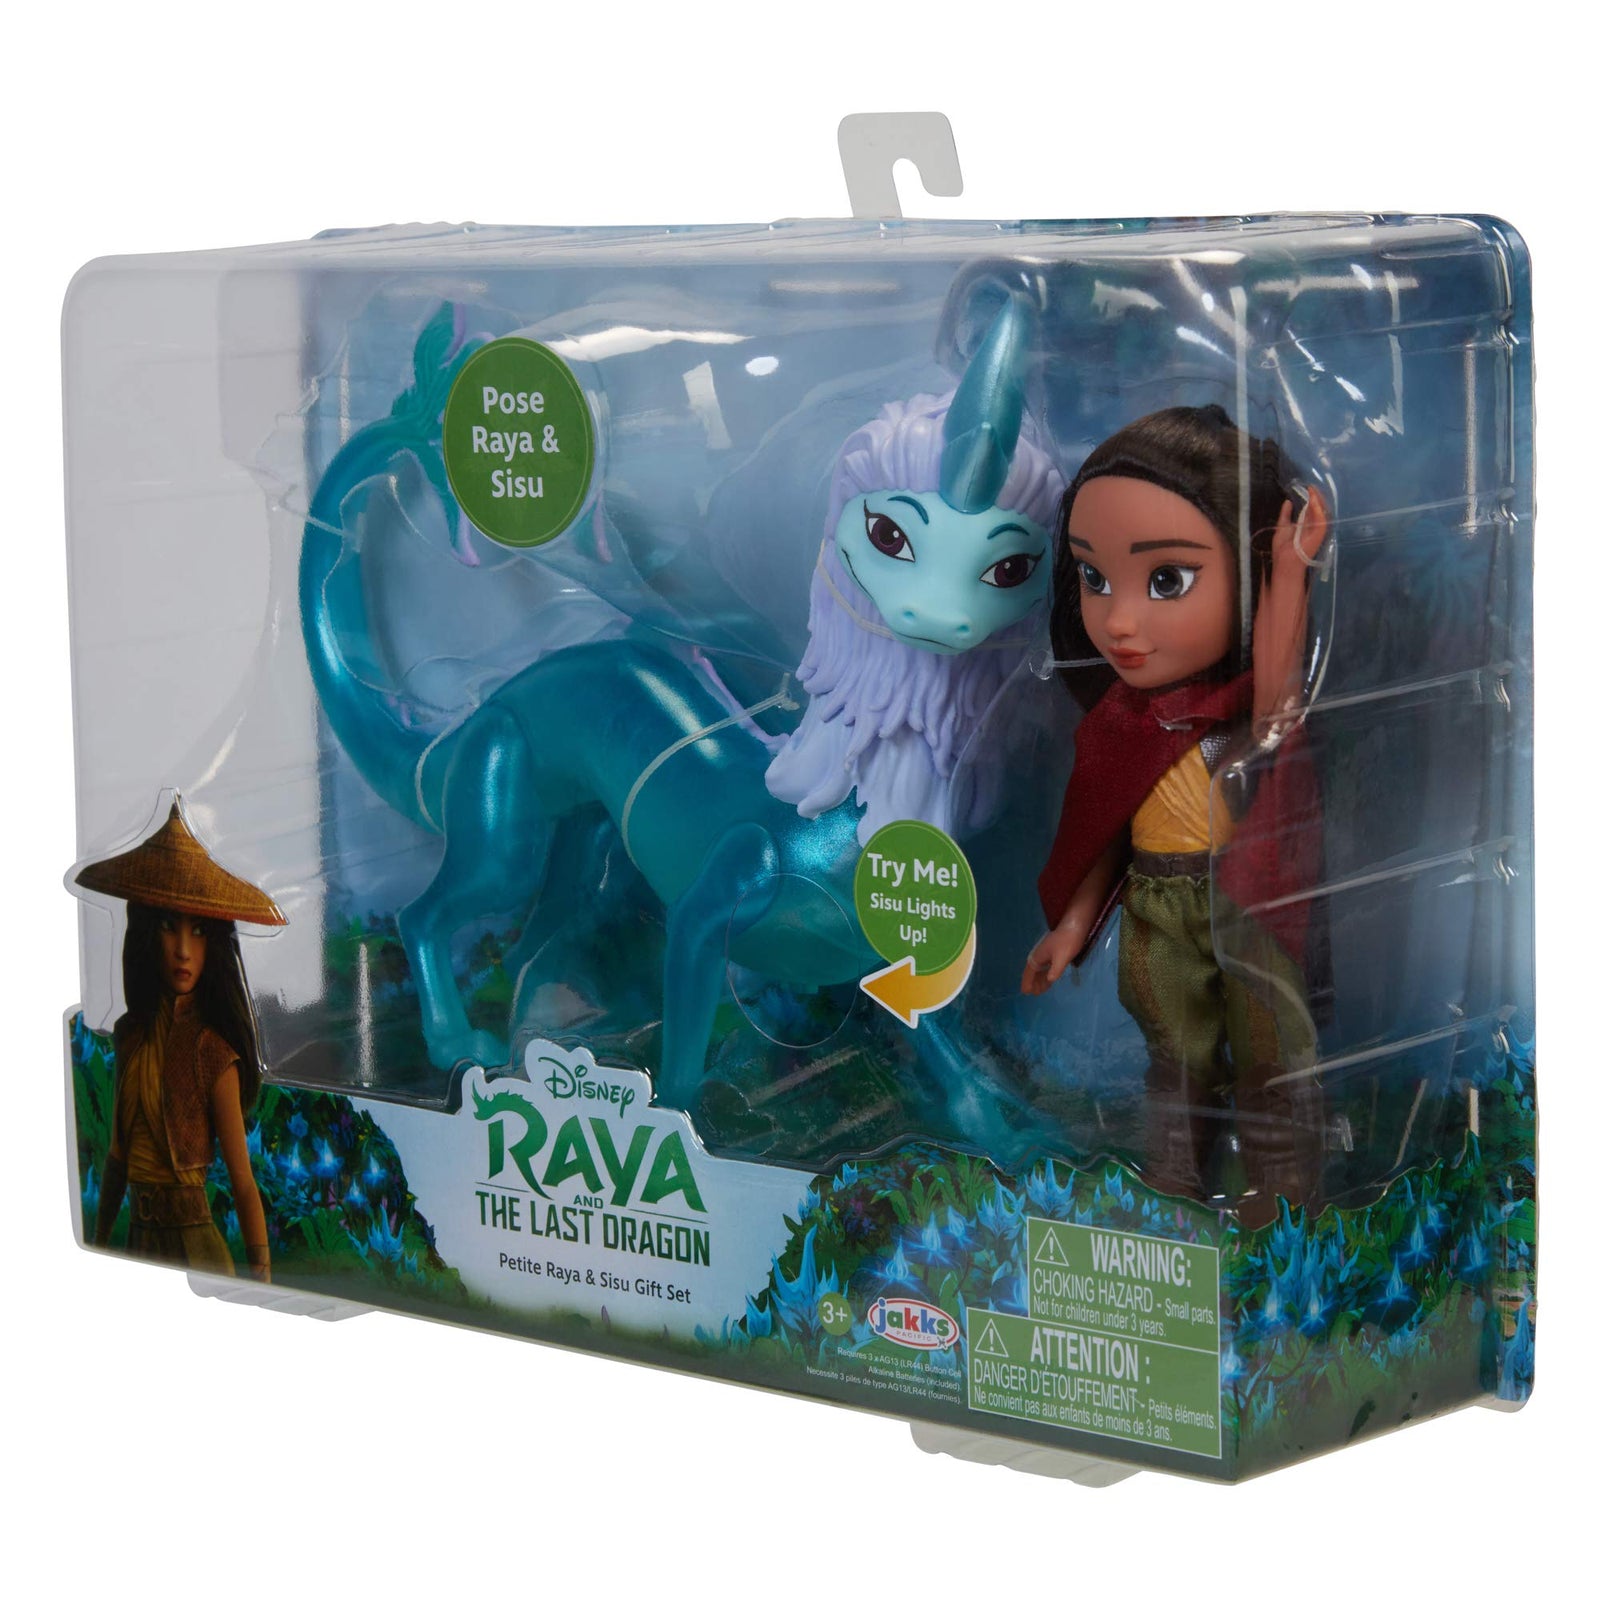 Disney's Raya and the Last Dragon 6-Inch Petite Raya Doll and Feature Sisu Dragon Figure Gift Set, 6 inches